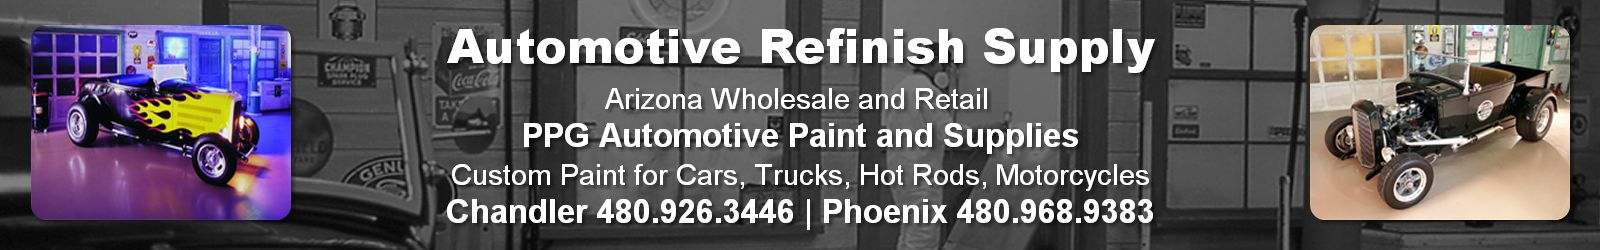 Automotive Refinish Supply - Phoenix, Chandler, Arizona